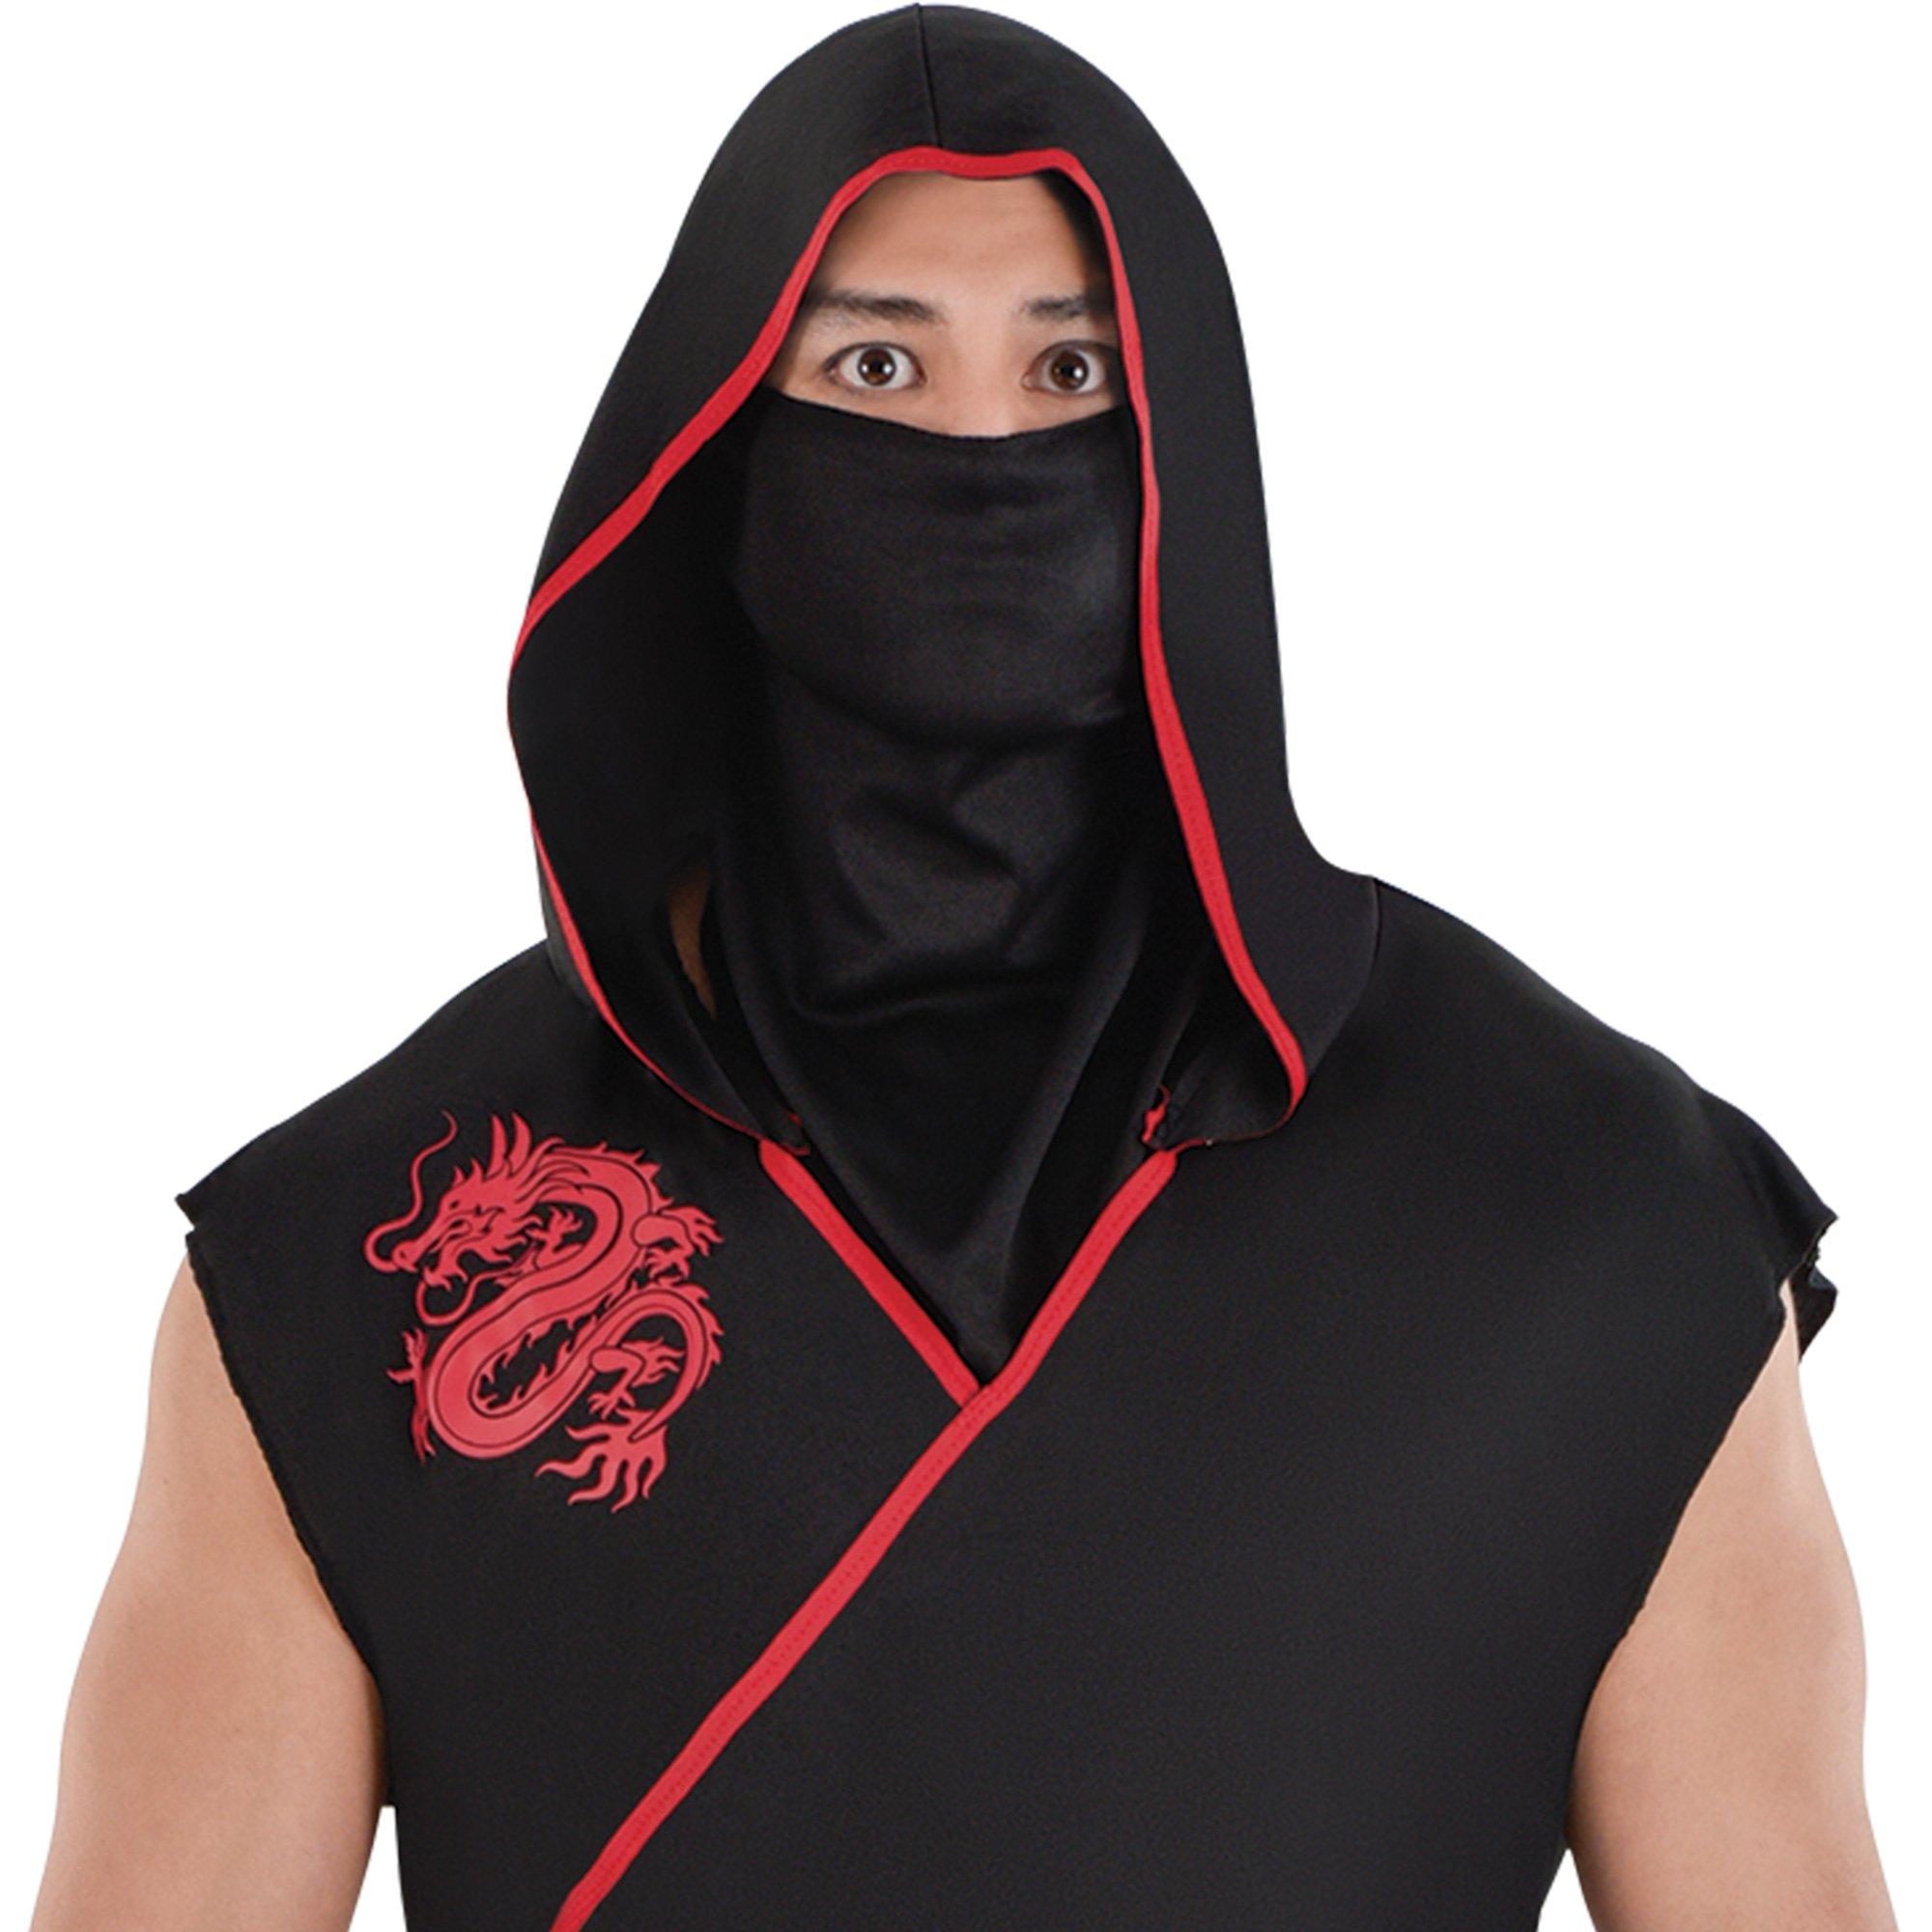 Women's Ninja Assassin Costume